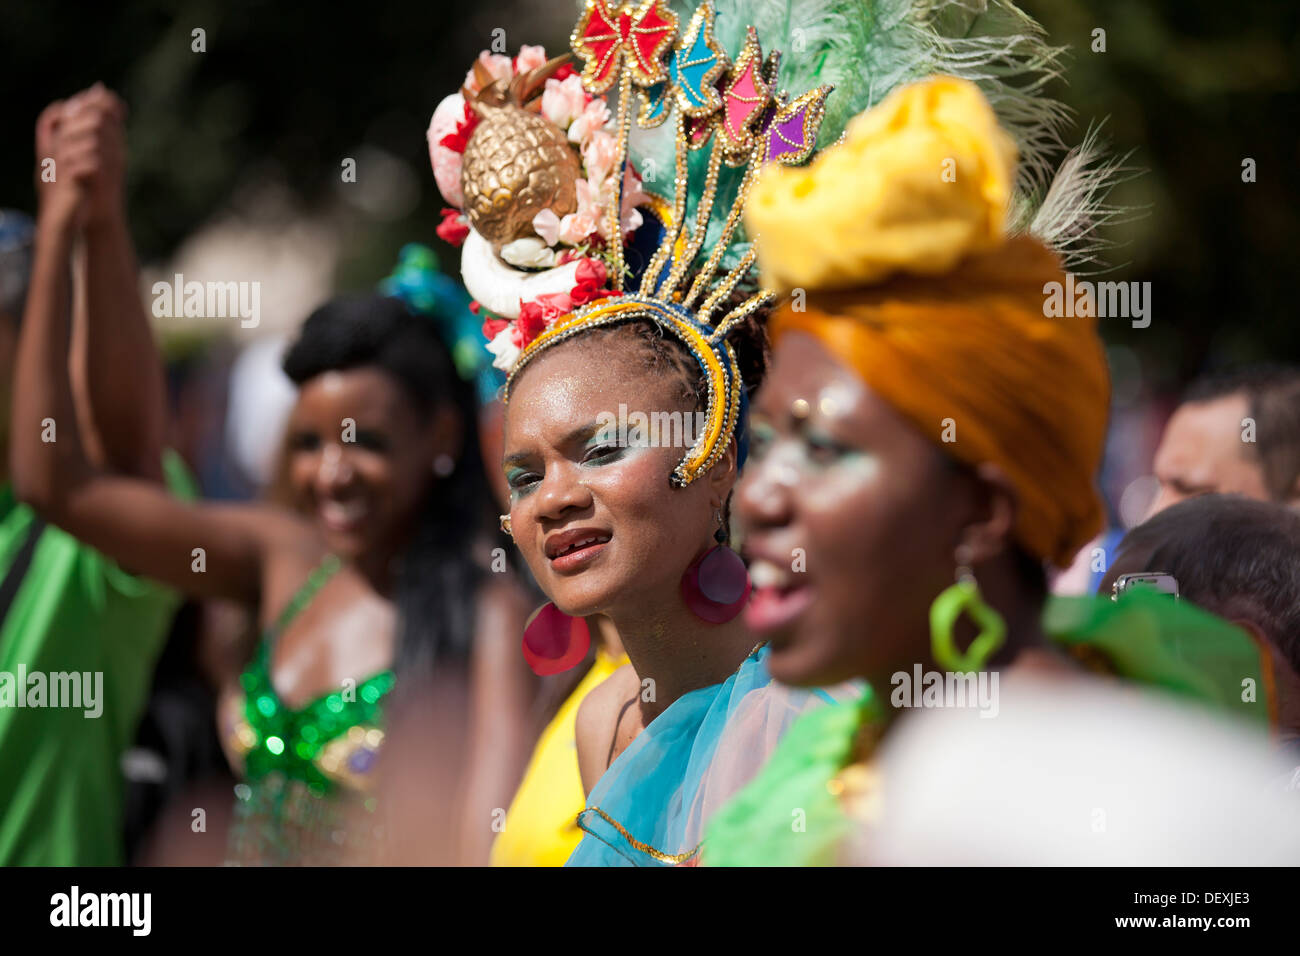 Brazilian samba dancer in traditional costume Stock Photo